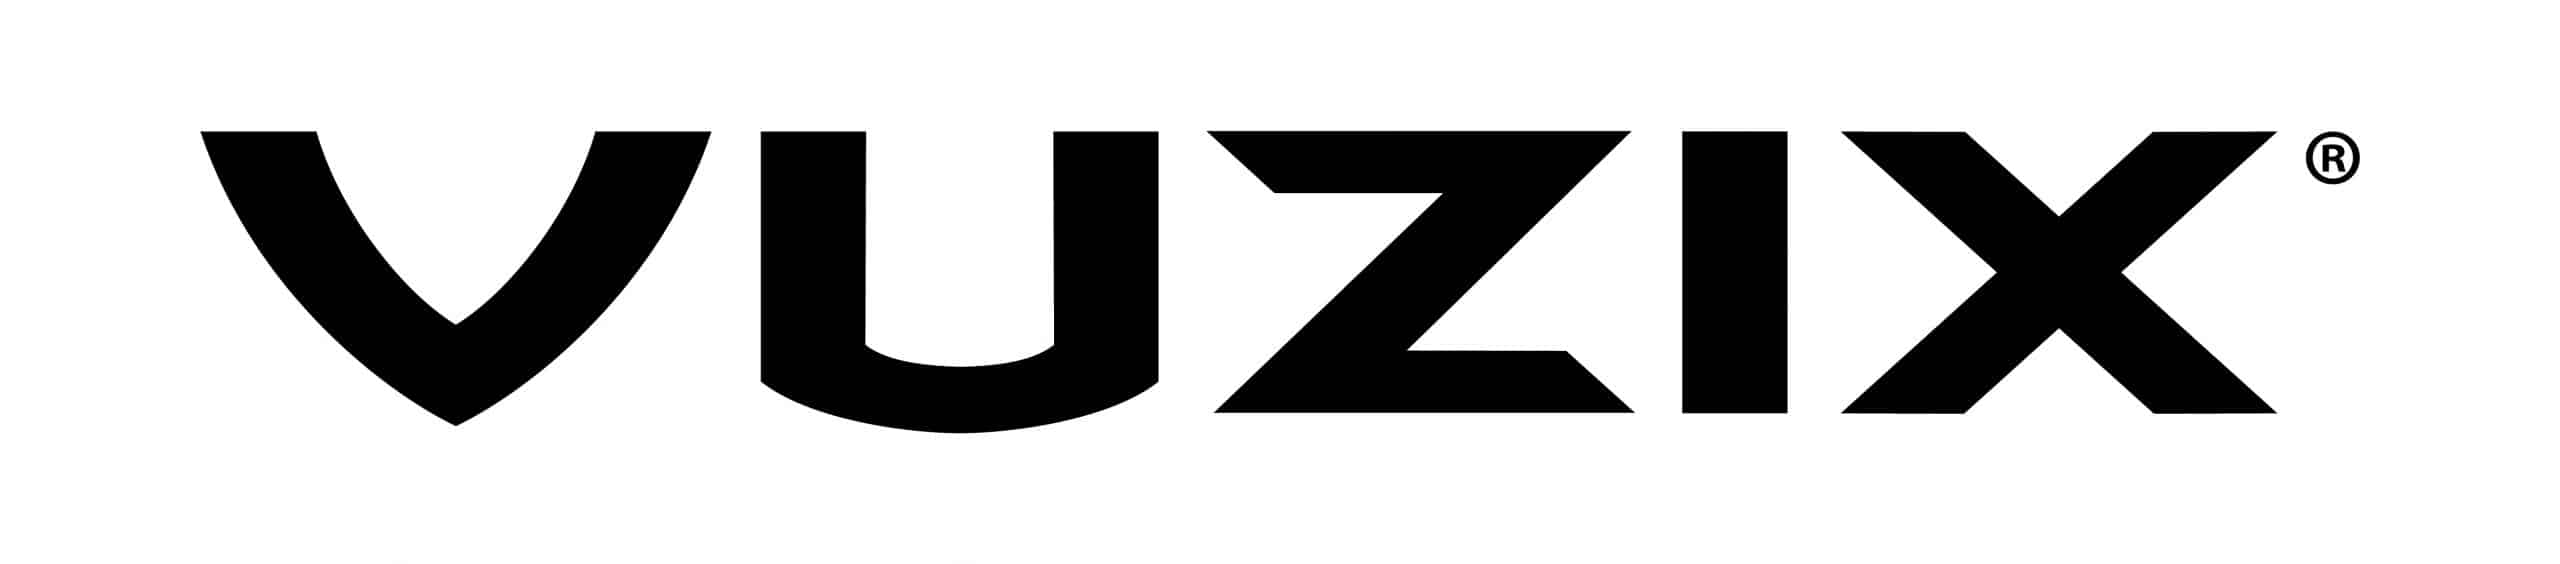 Vuzix Corporation logo